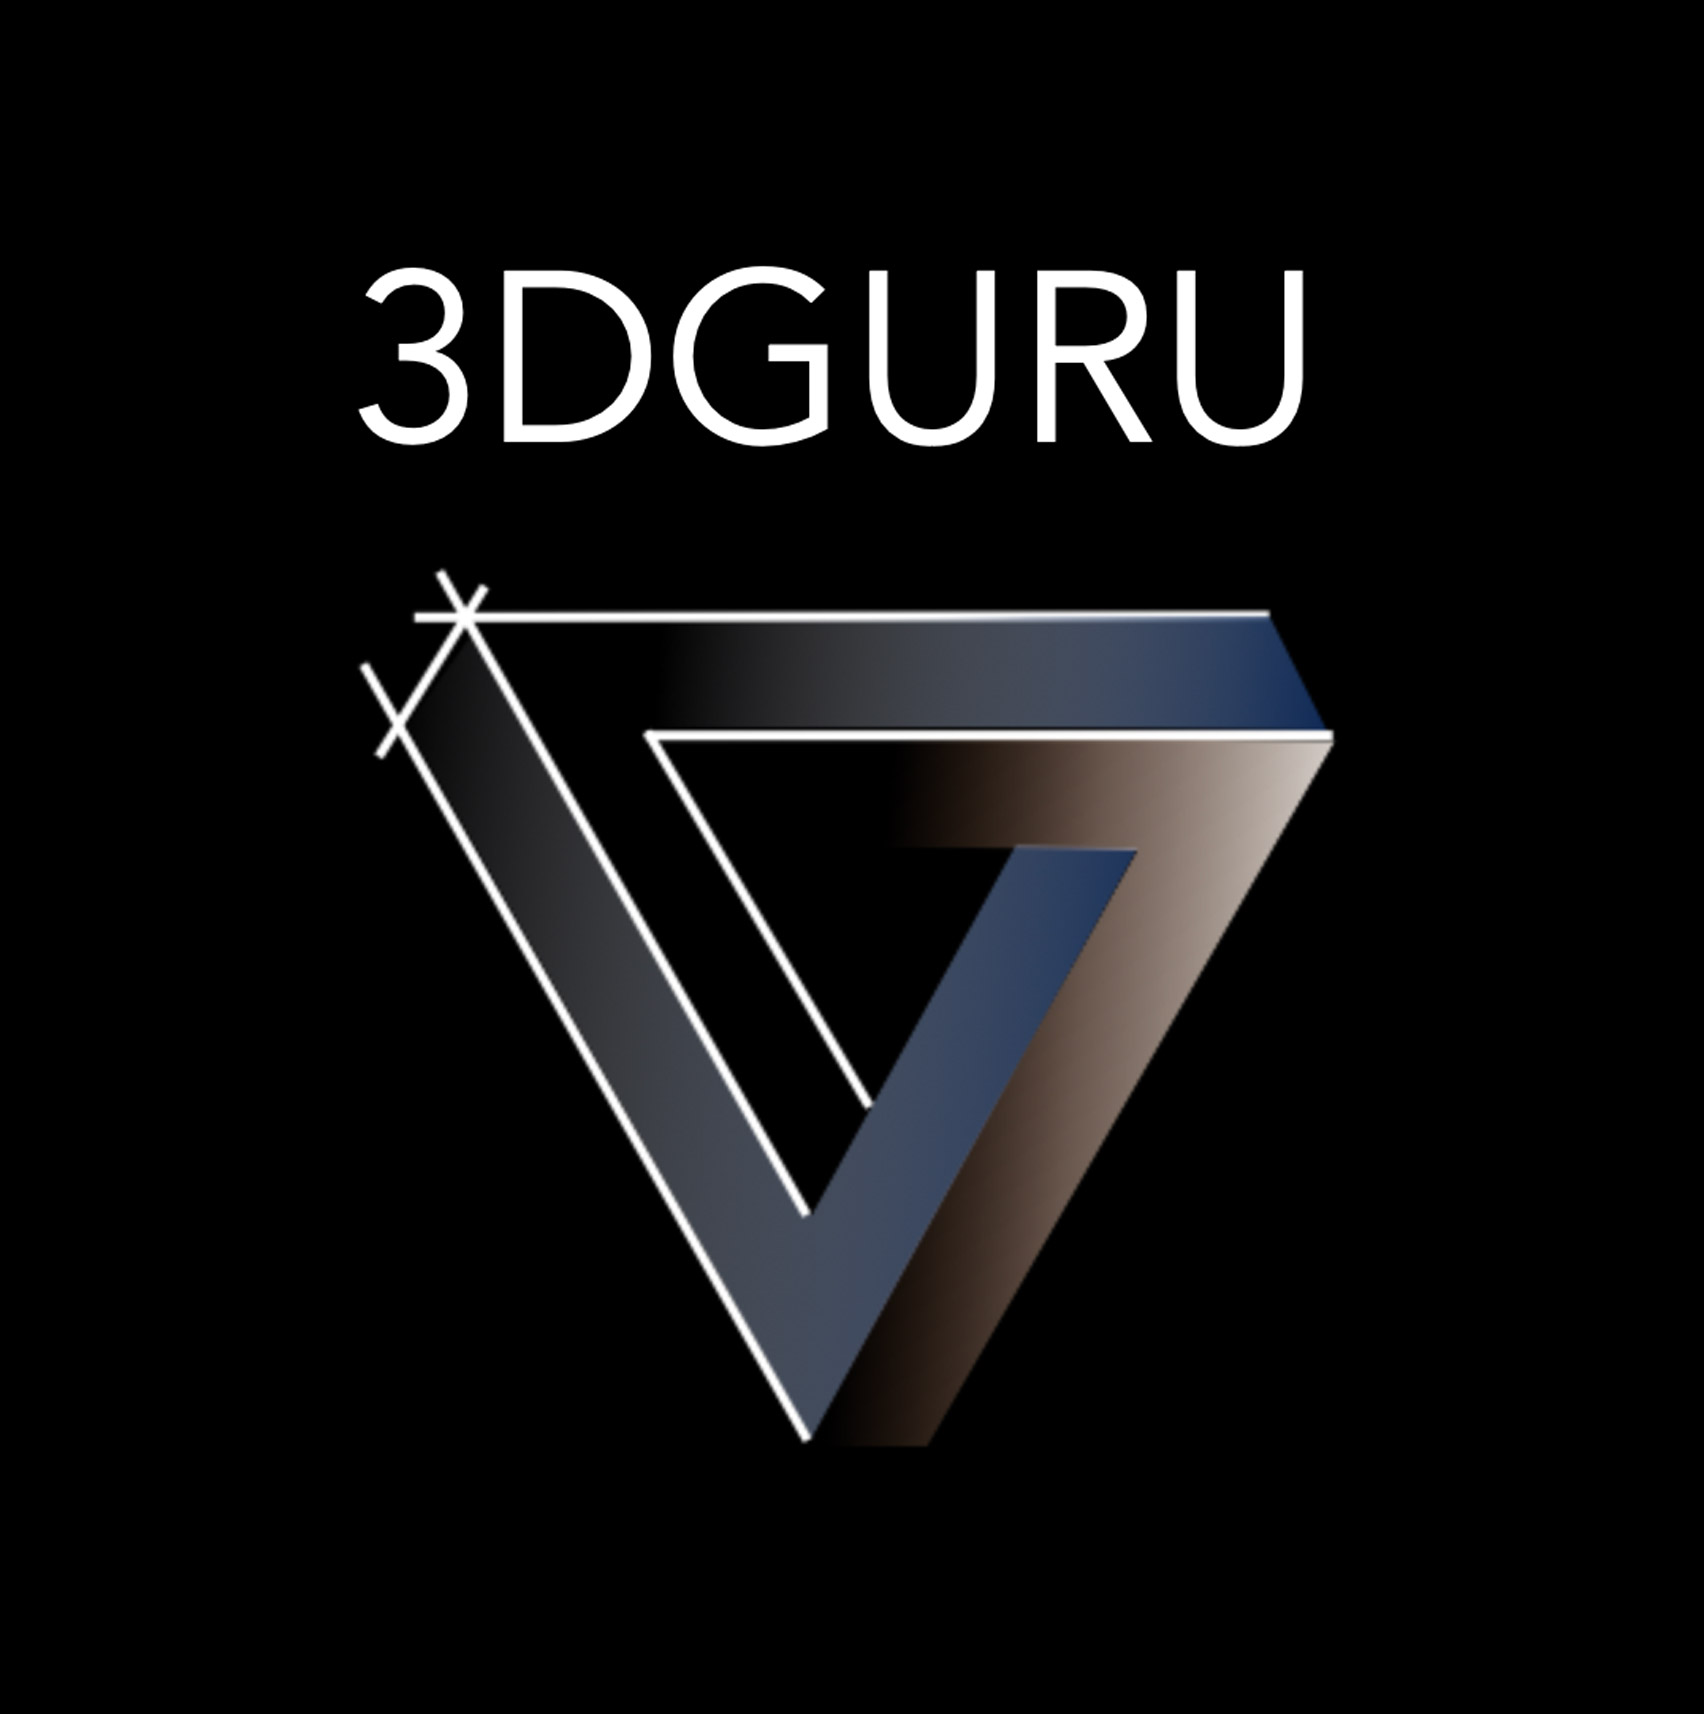 3DGuru logo